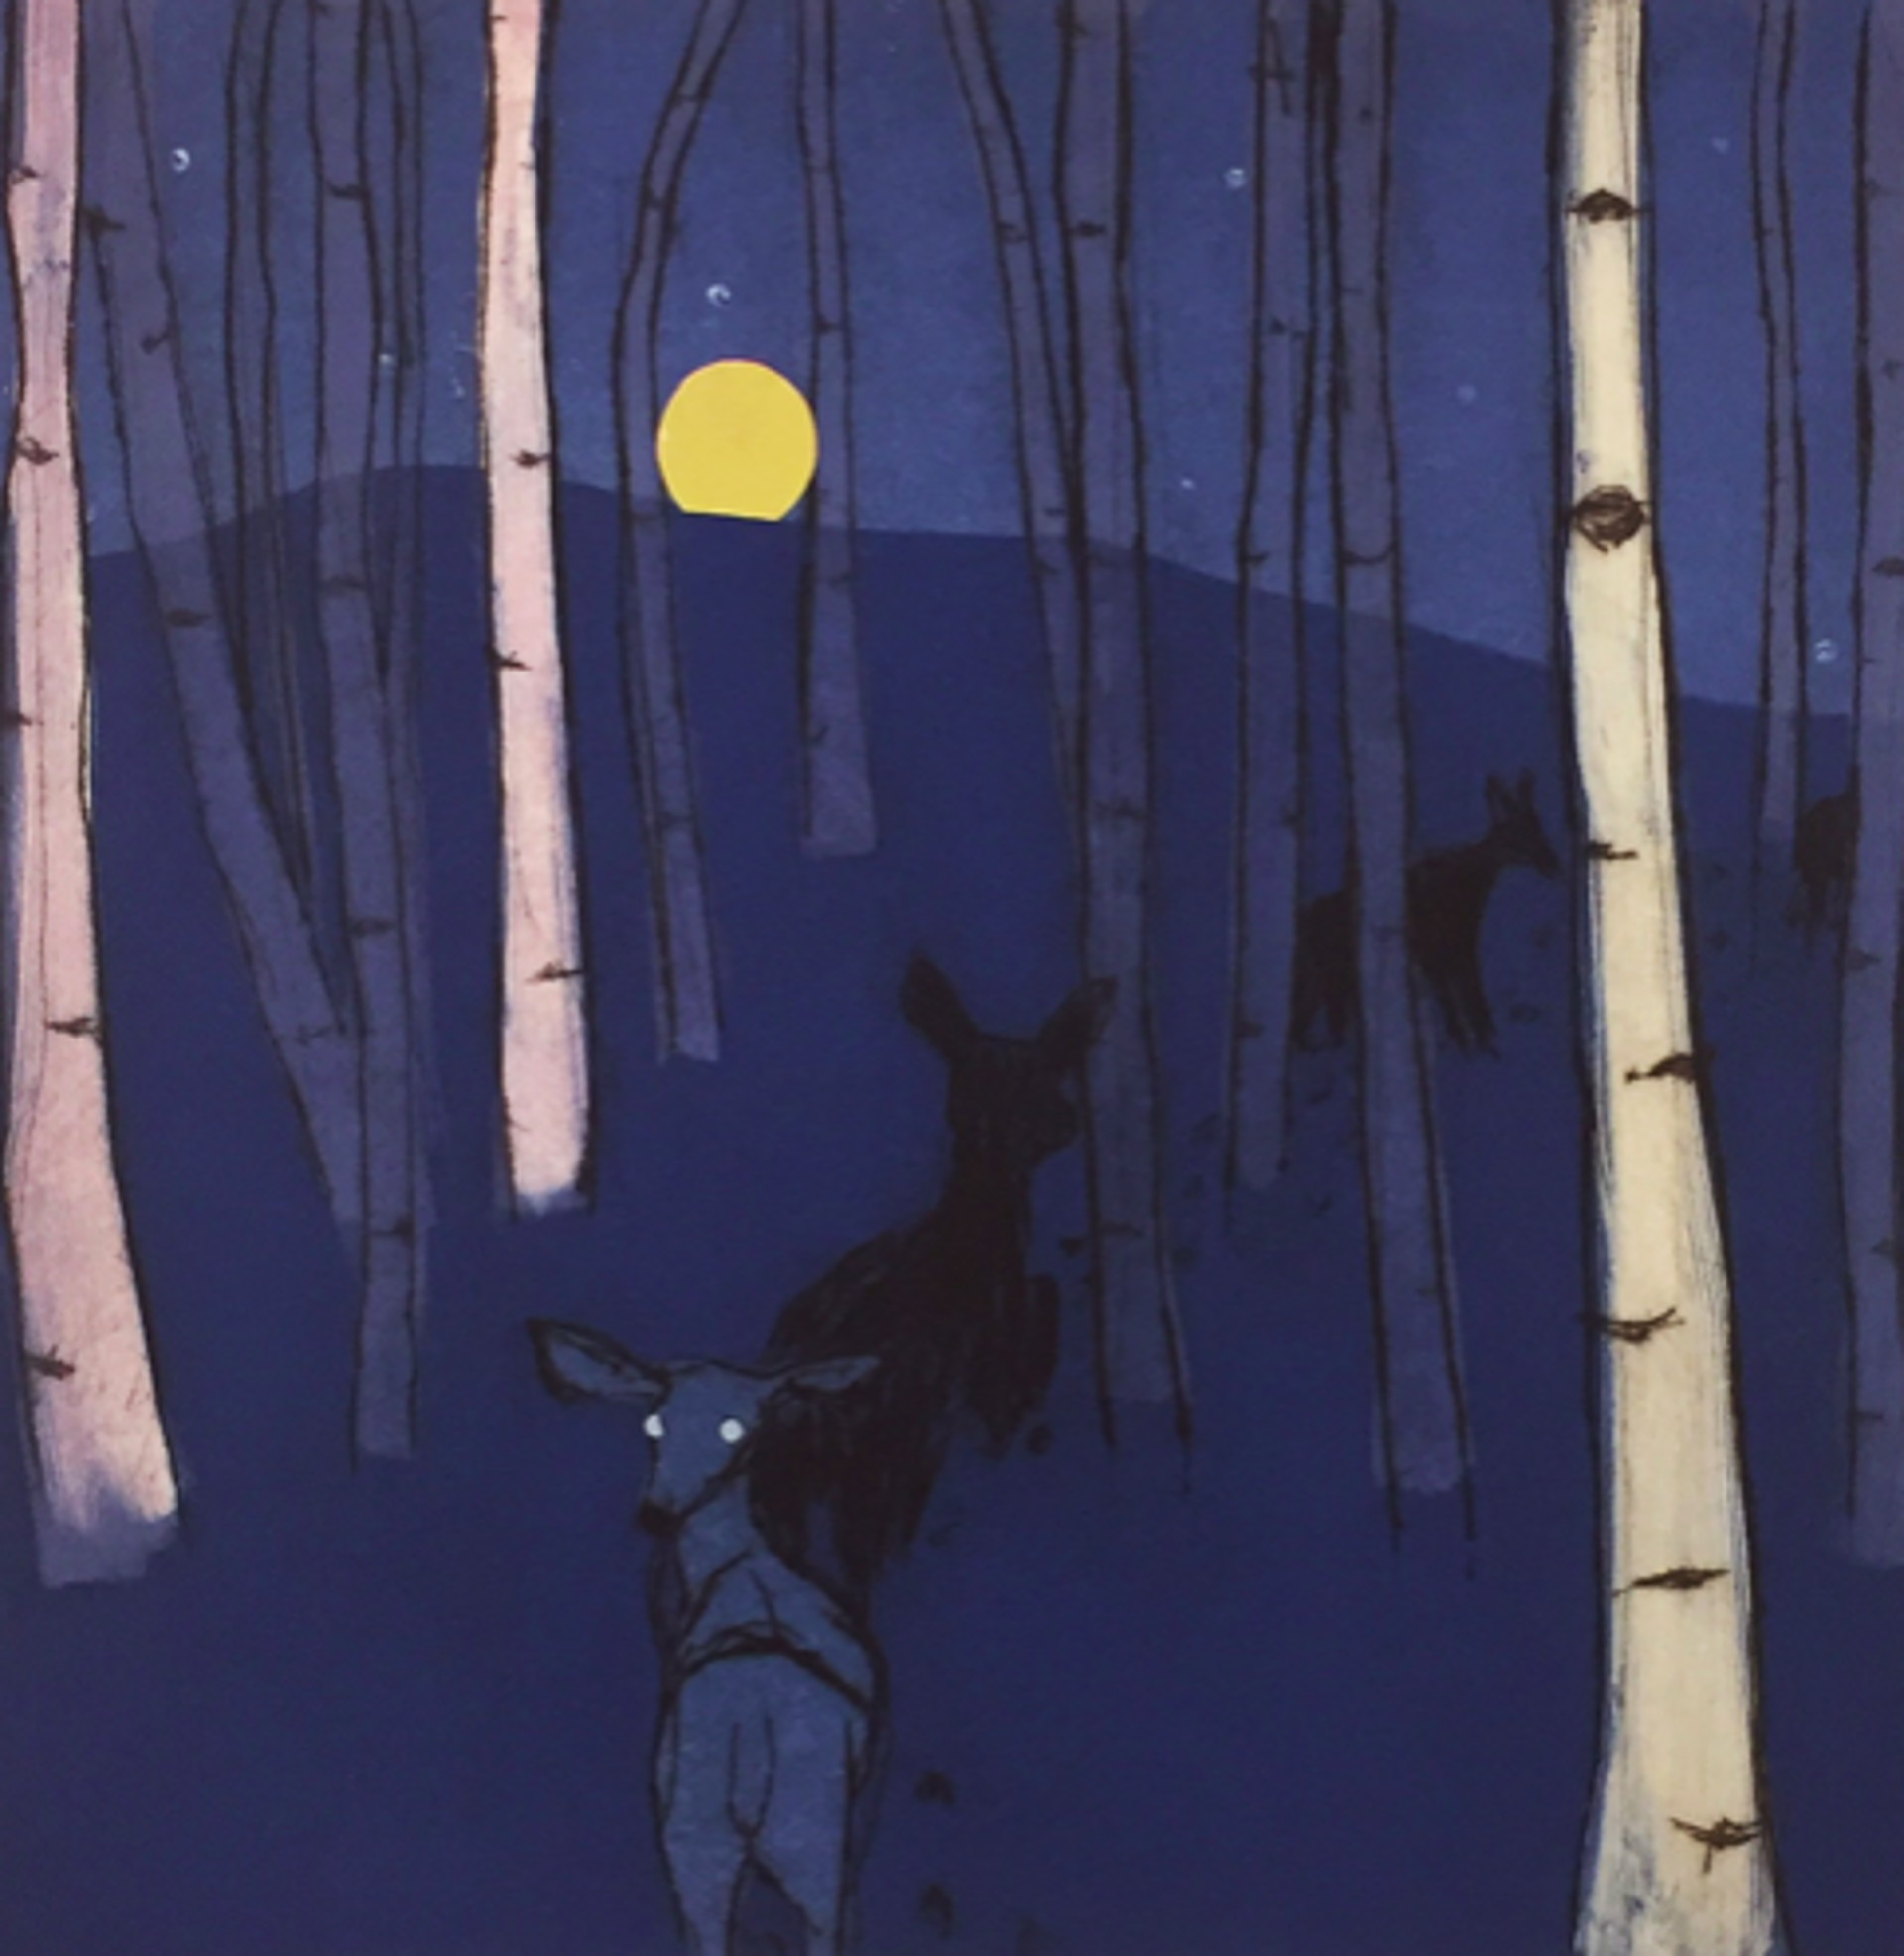 Moonrise by Paula S. Kraemer